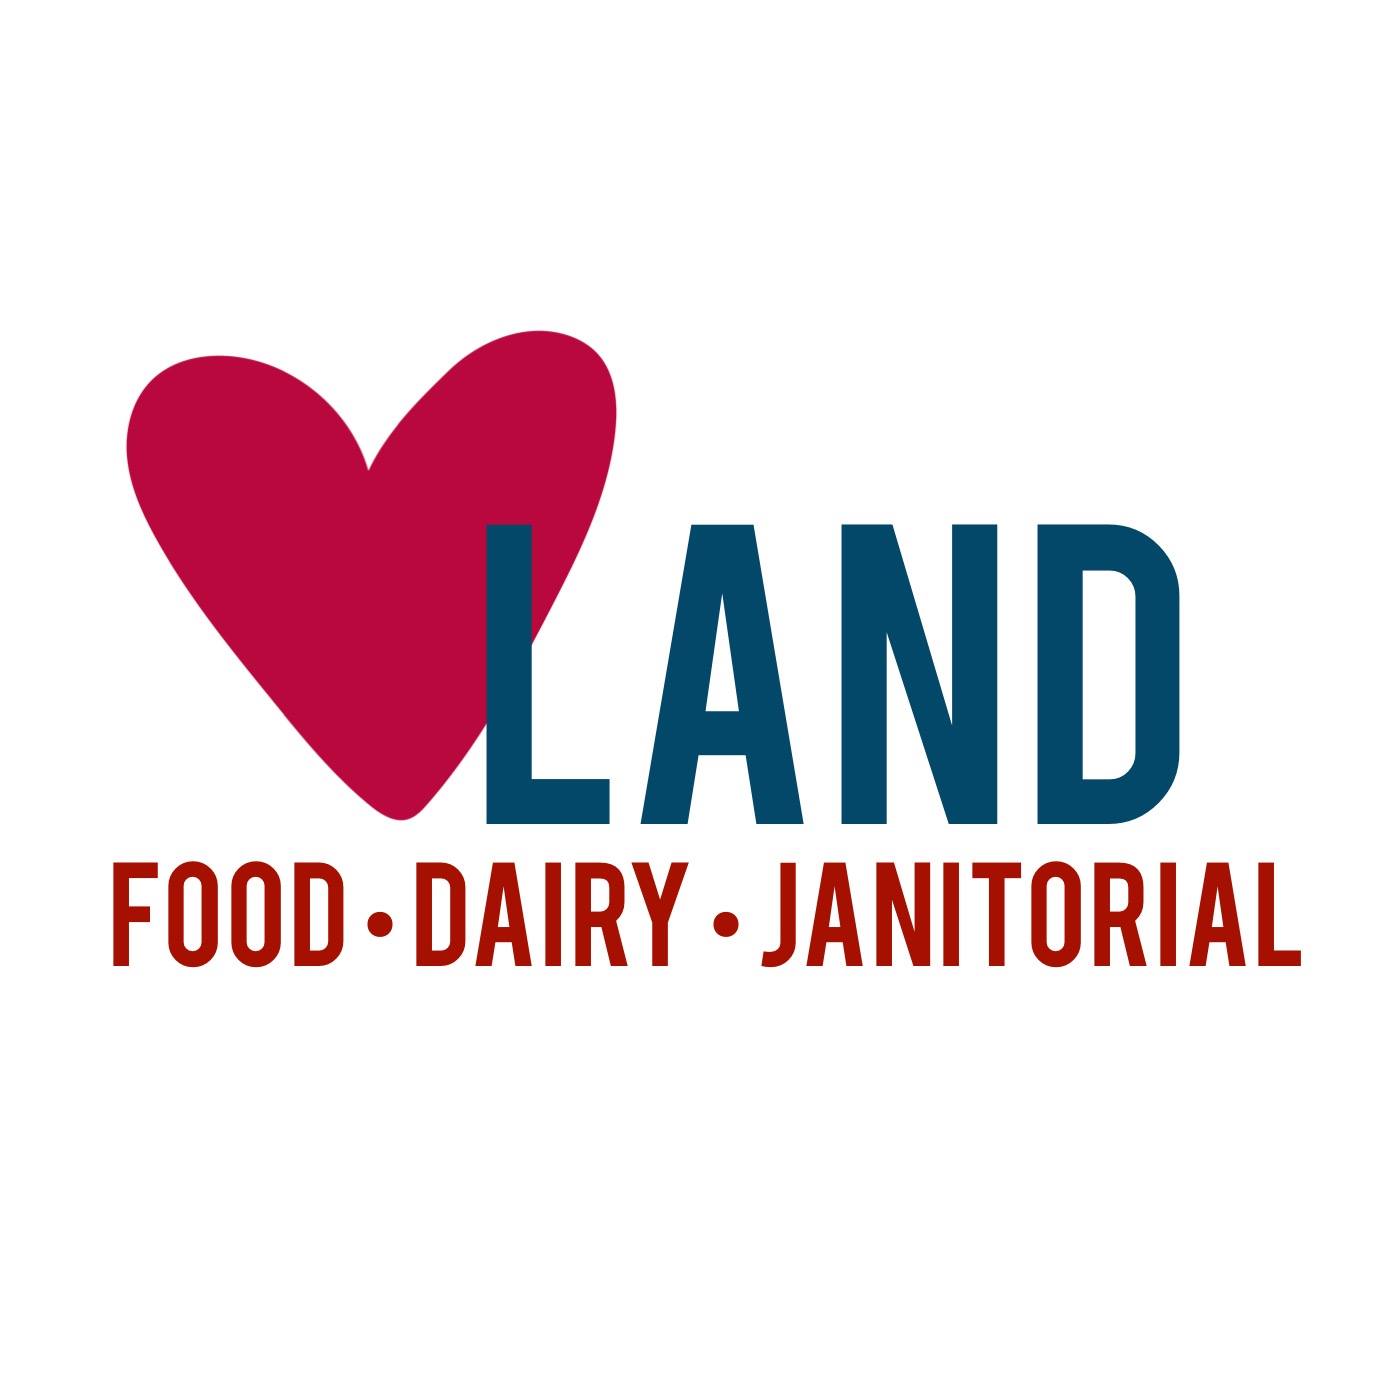 Heartland Food, Dairy & Janitorial